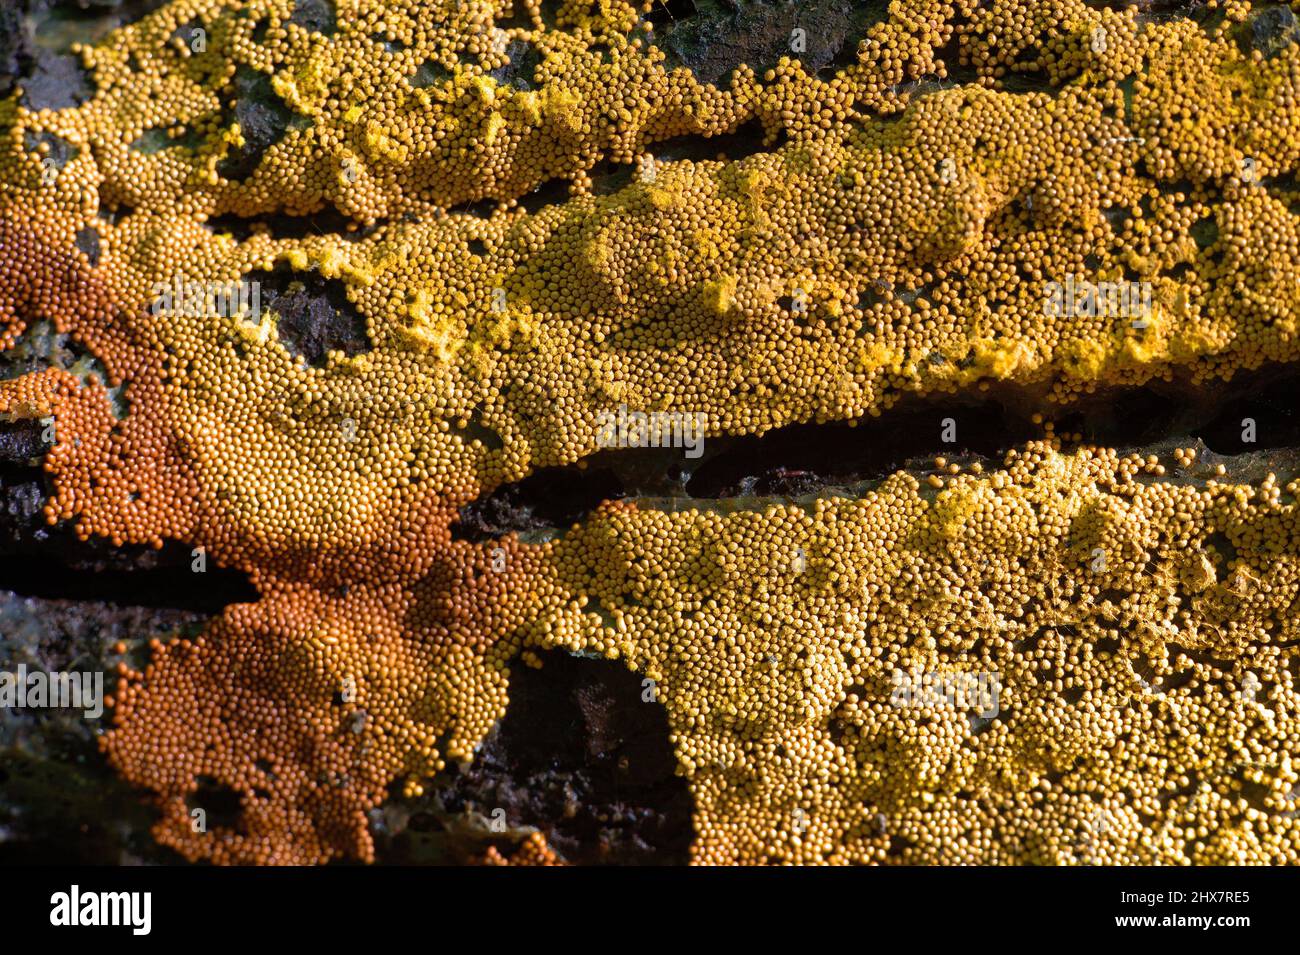 Carpet slime mold, Trichia persimilis Stock Photo